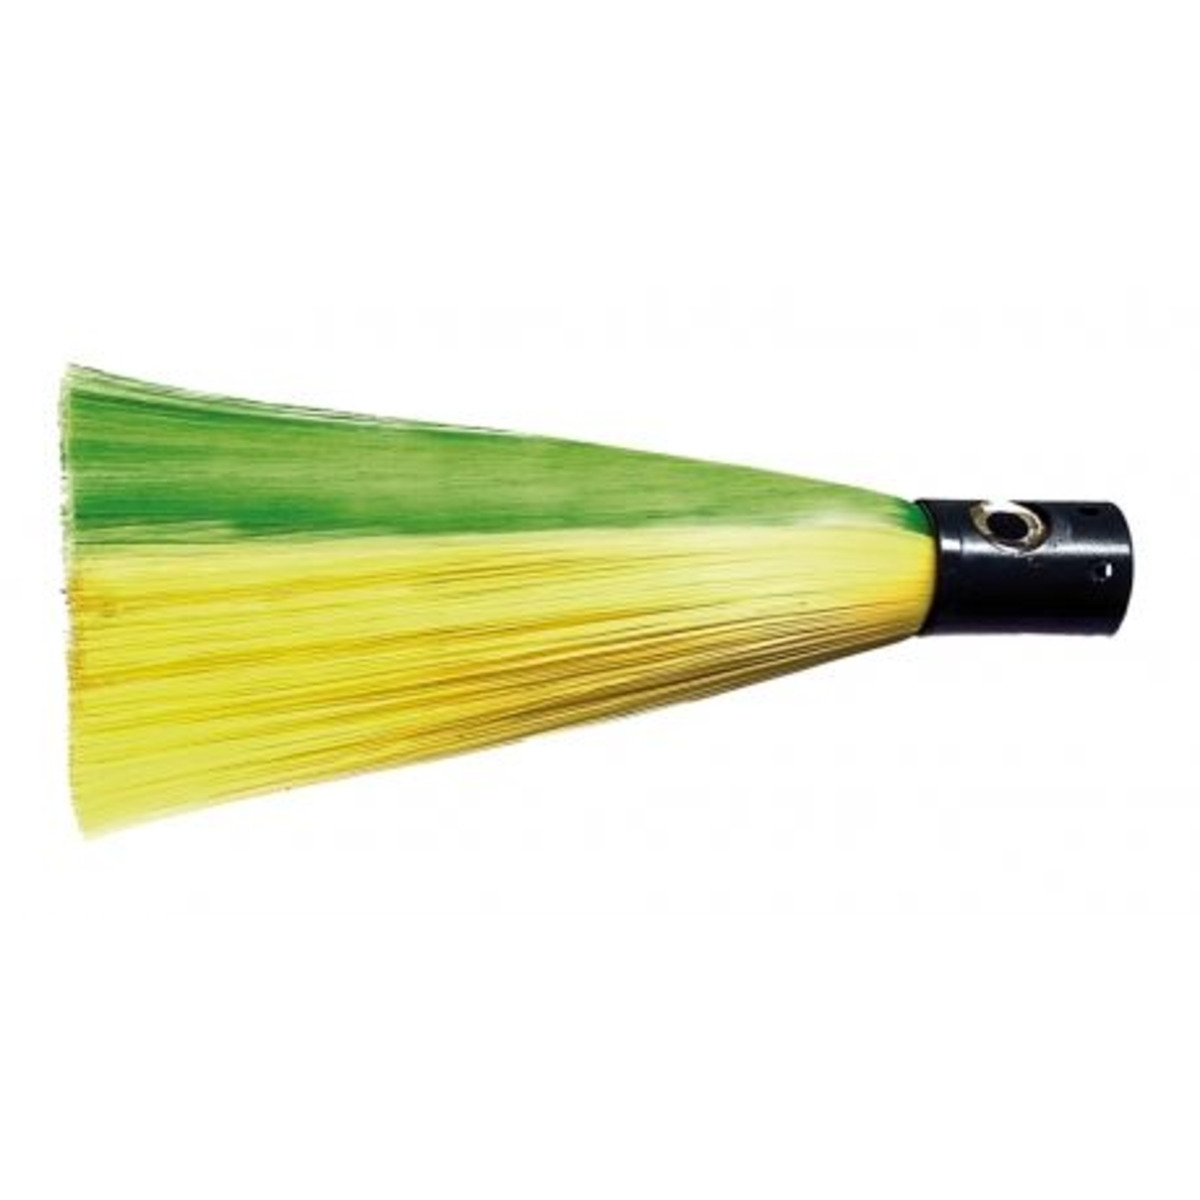 H2o Pro Express Lure - Green Yellow - 20 cm